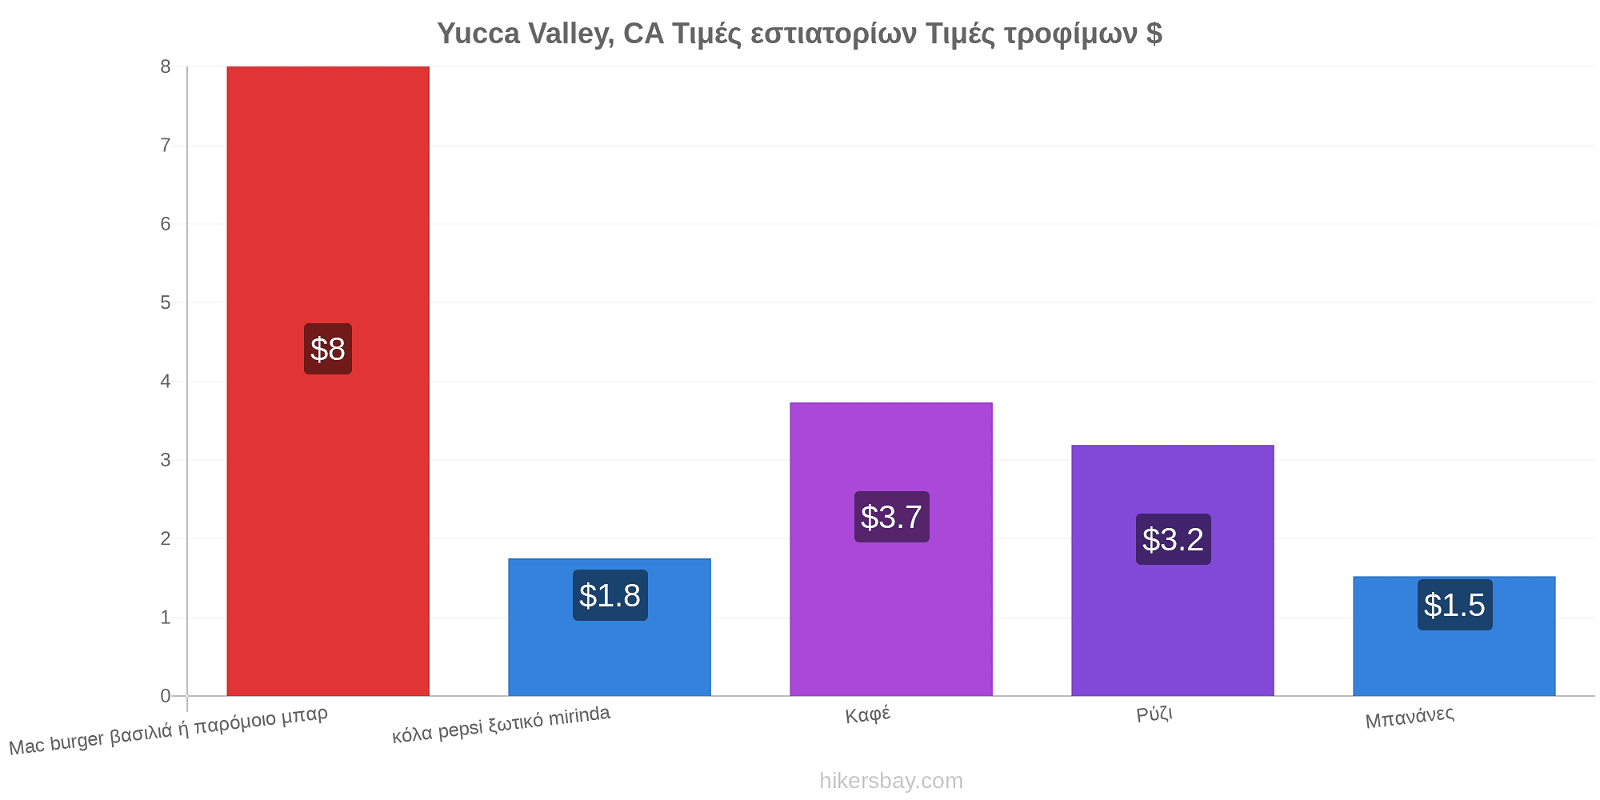 Yucca Valley, CA αλλαγές τιμών hikersbay.com